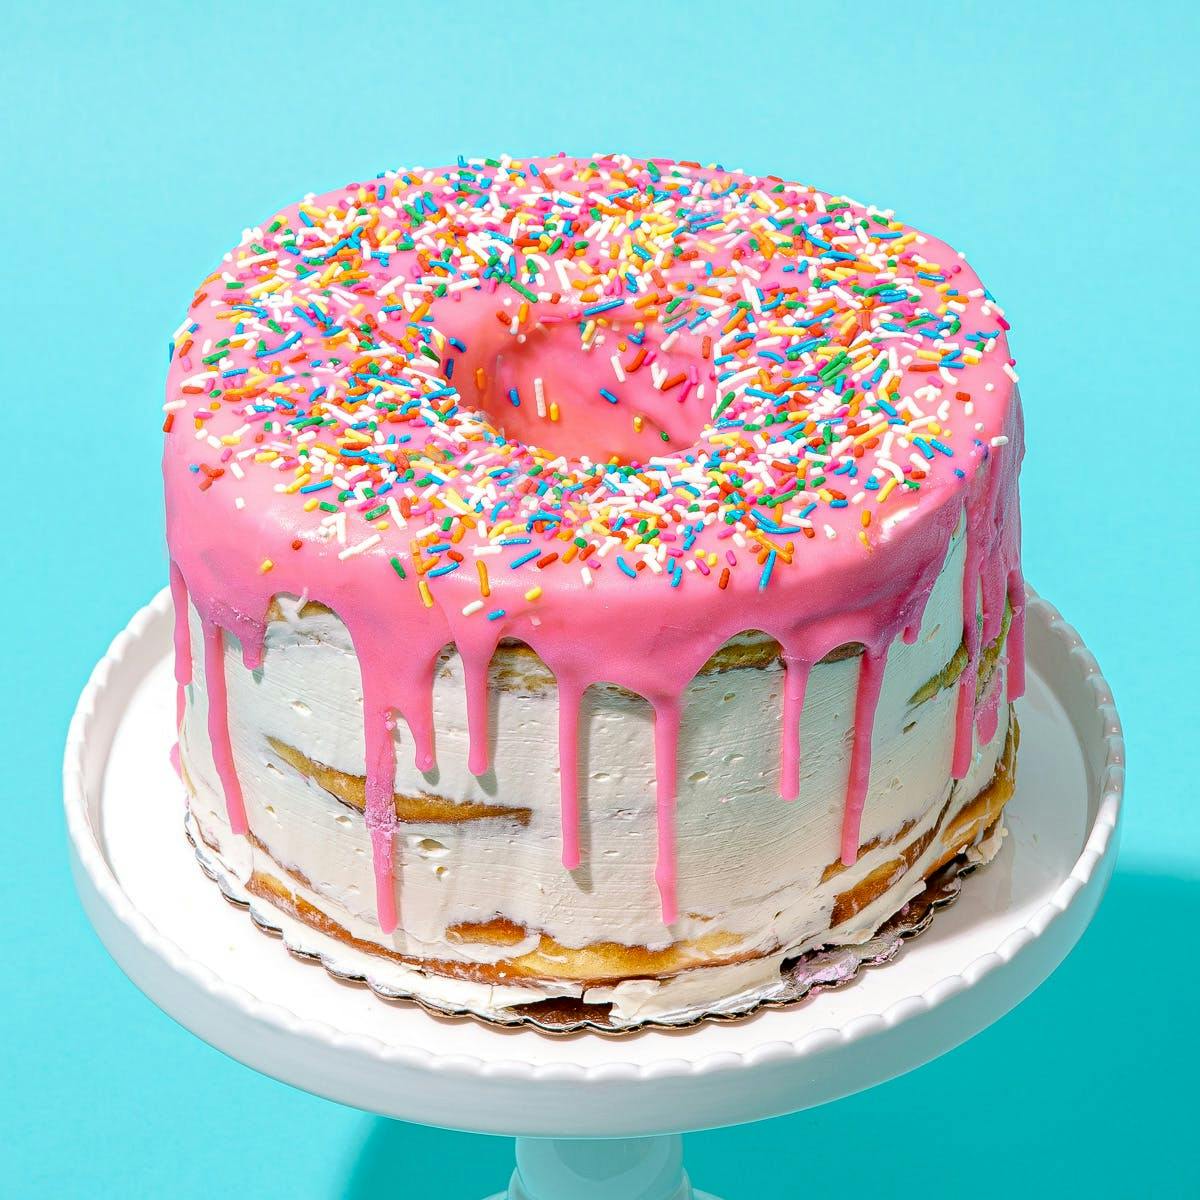 Icebox Doughnut Birthday Cake Recipe | Cooking Channel